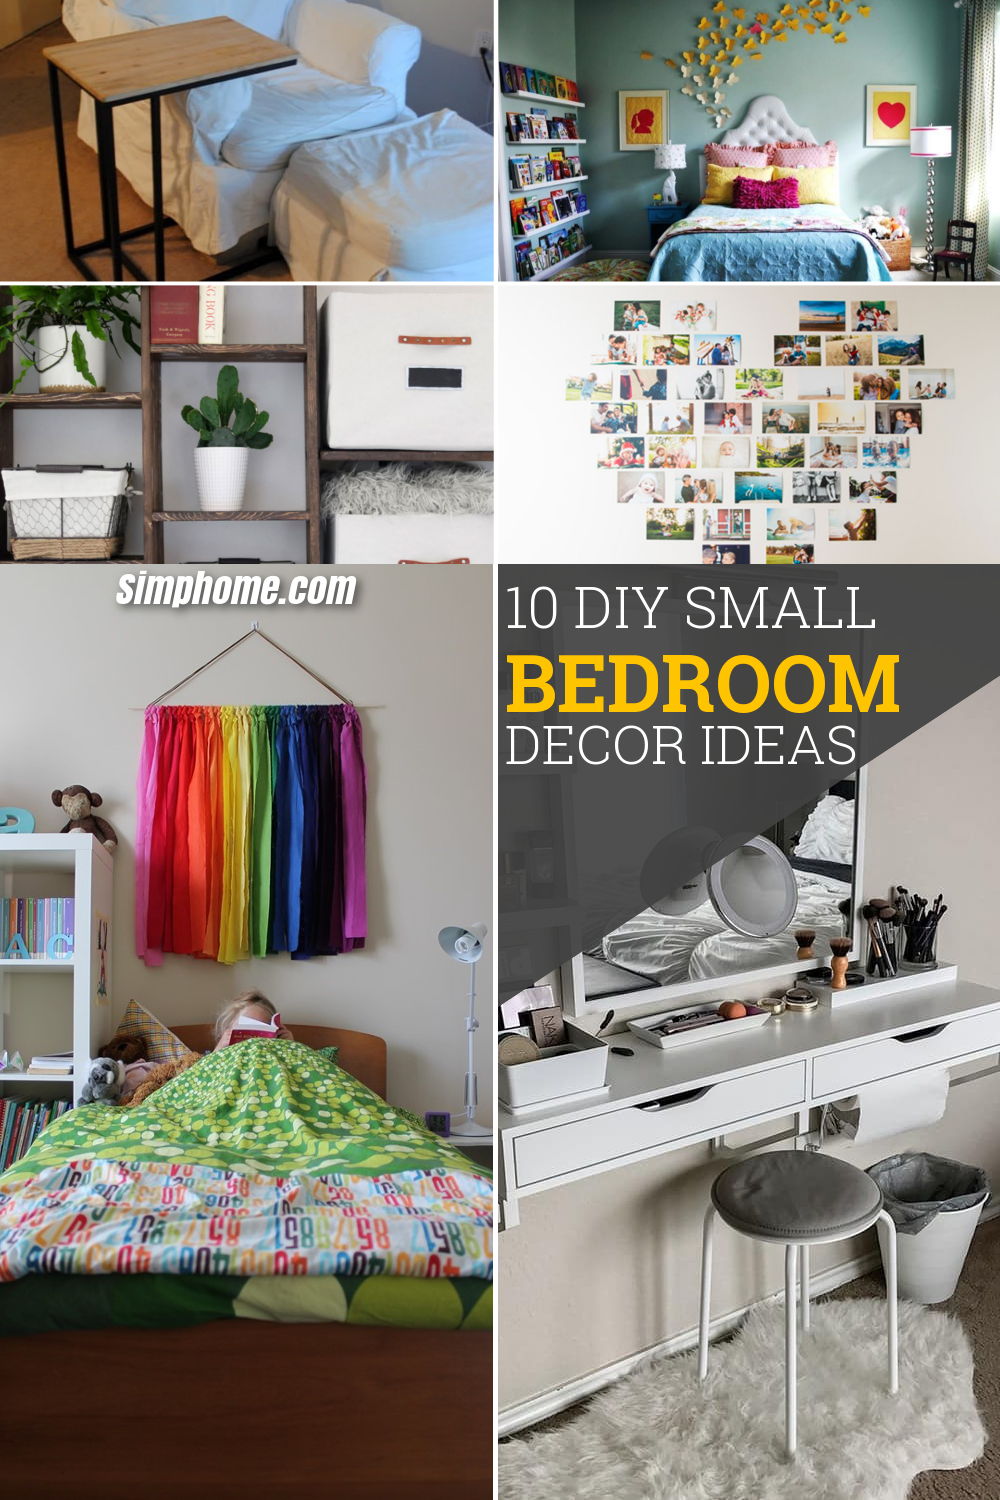 10 DIY Small Bedroom Decorating Ideas via simphome pinterest long